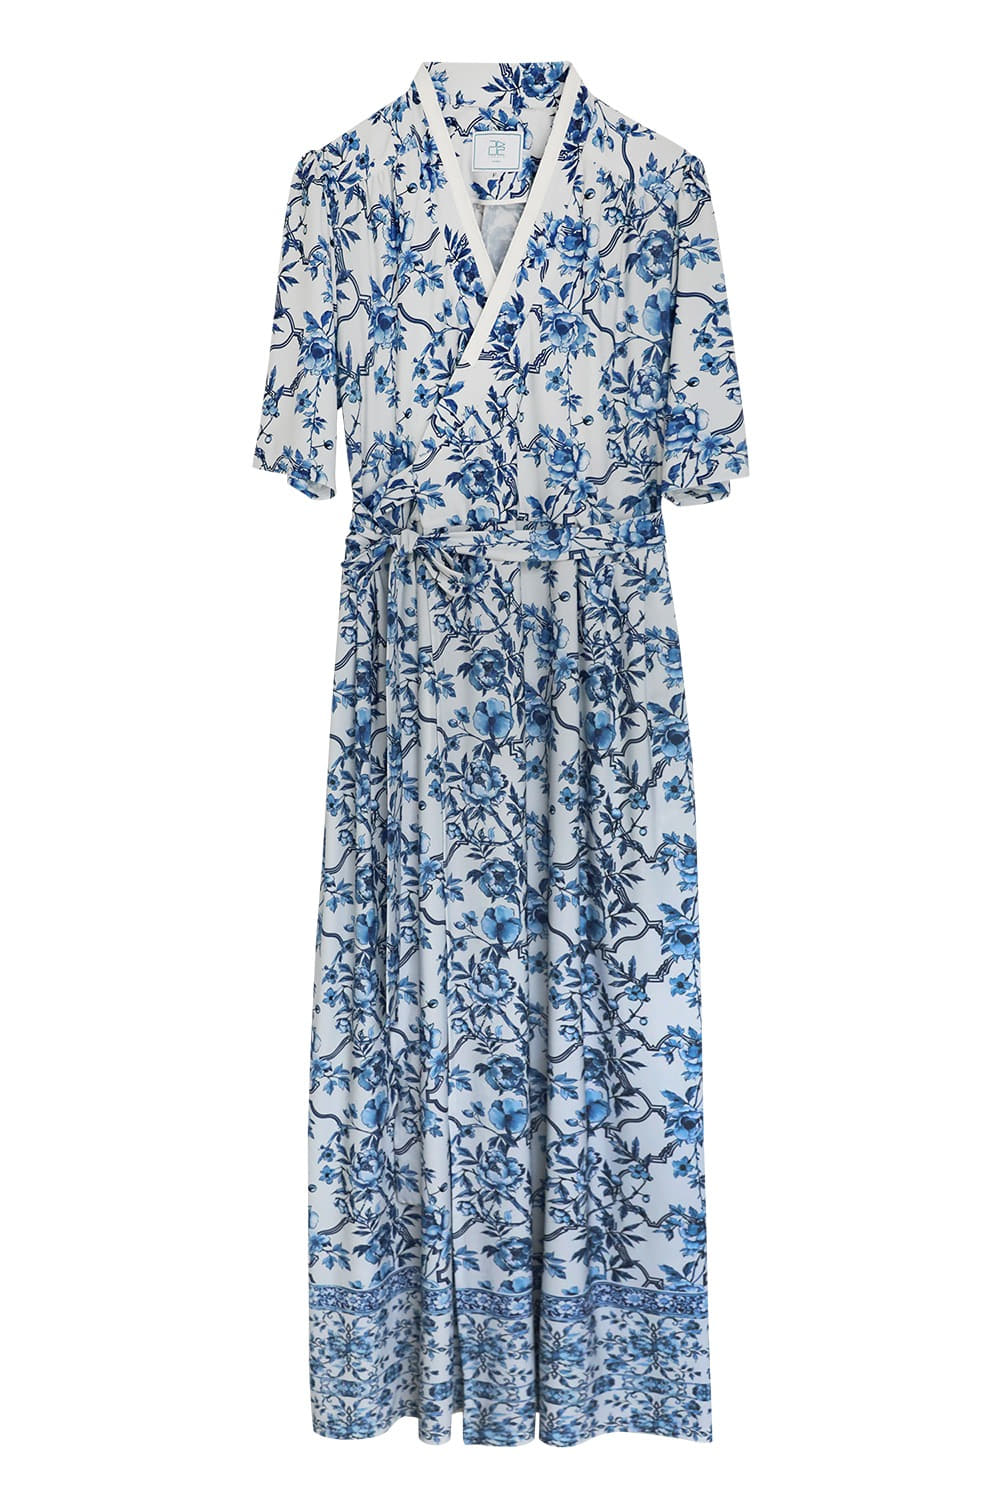 White Porcelain Peony Injeolmi Hanbok Dress [Blue]